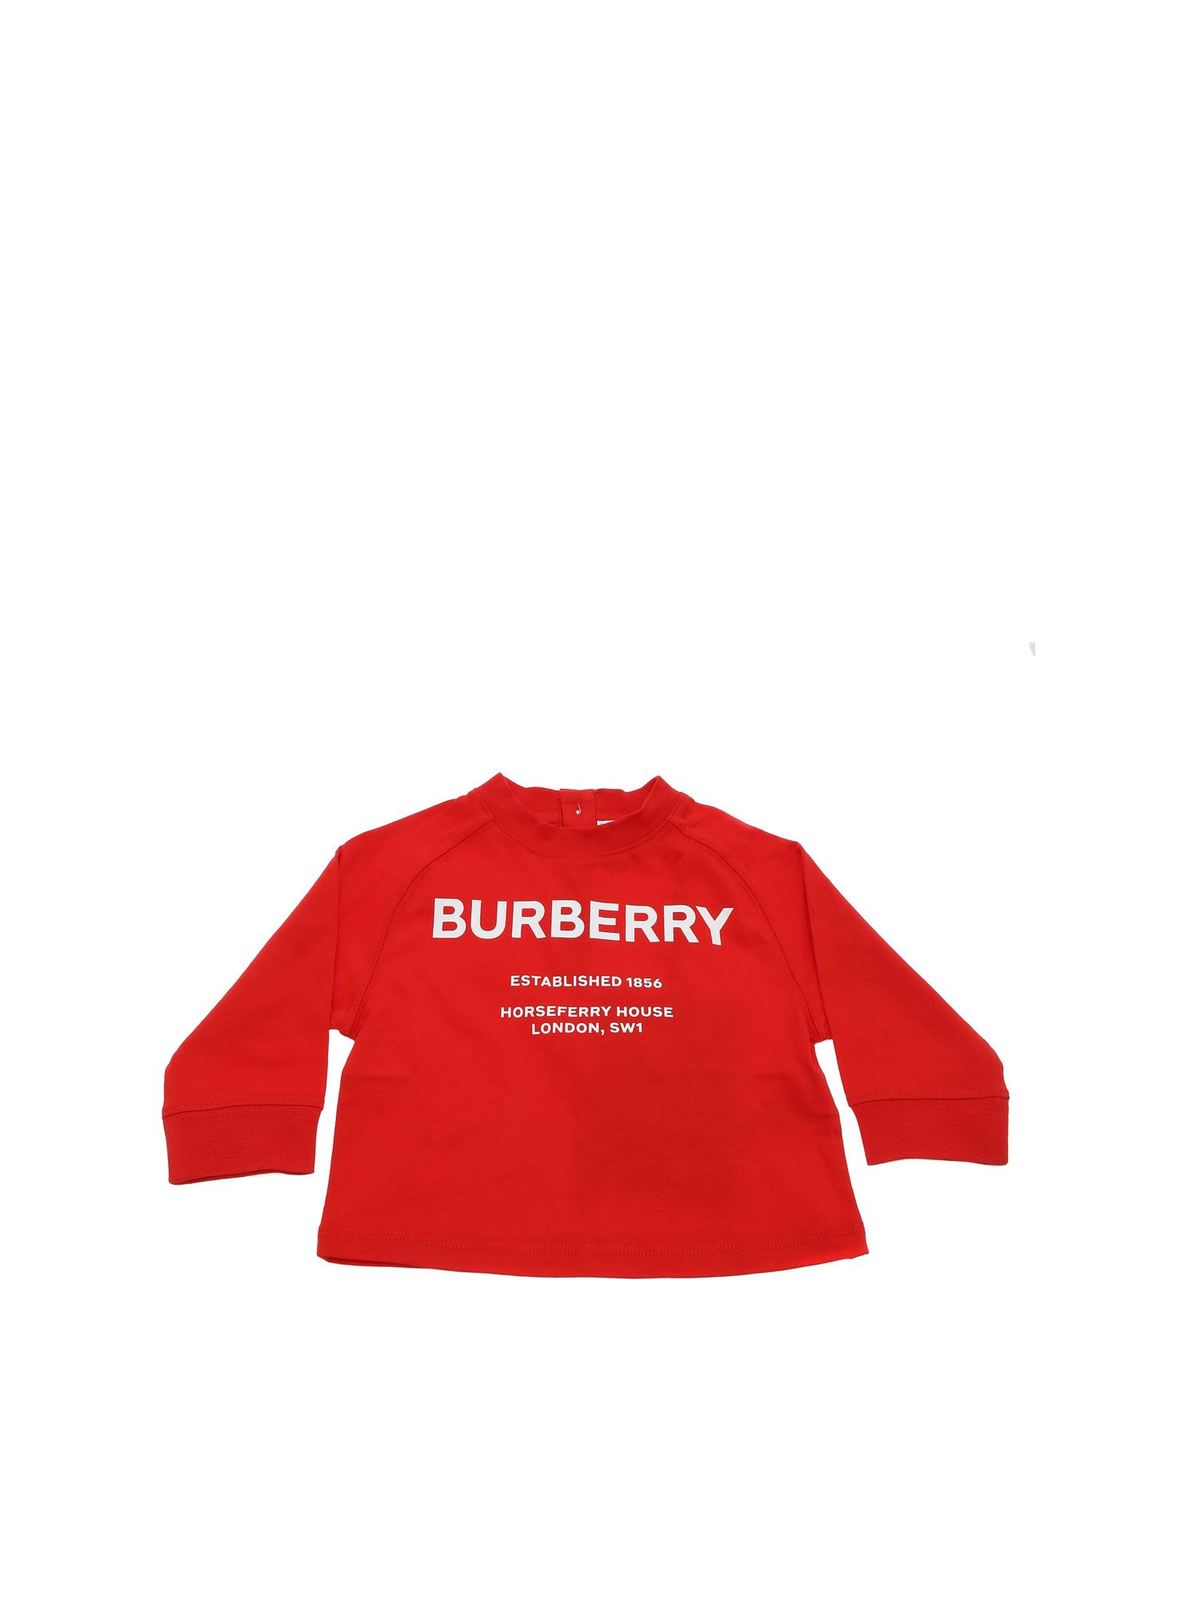 burberry shirt red